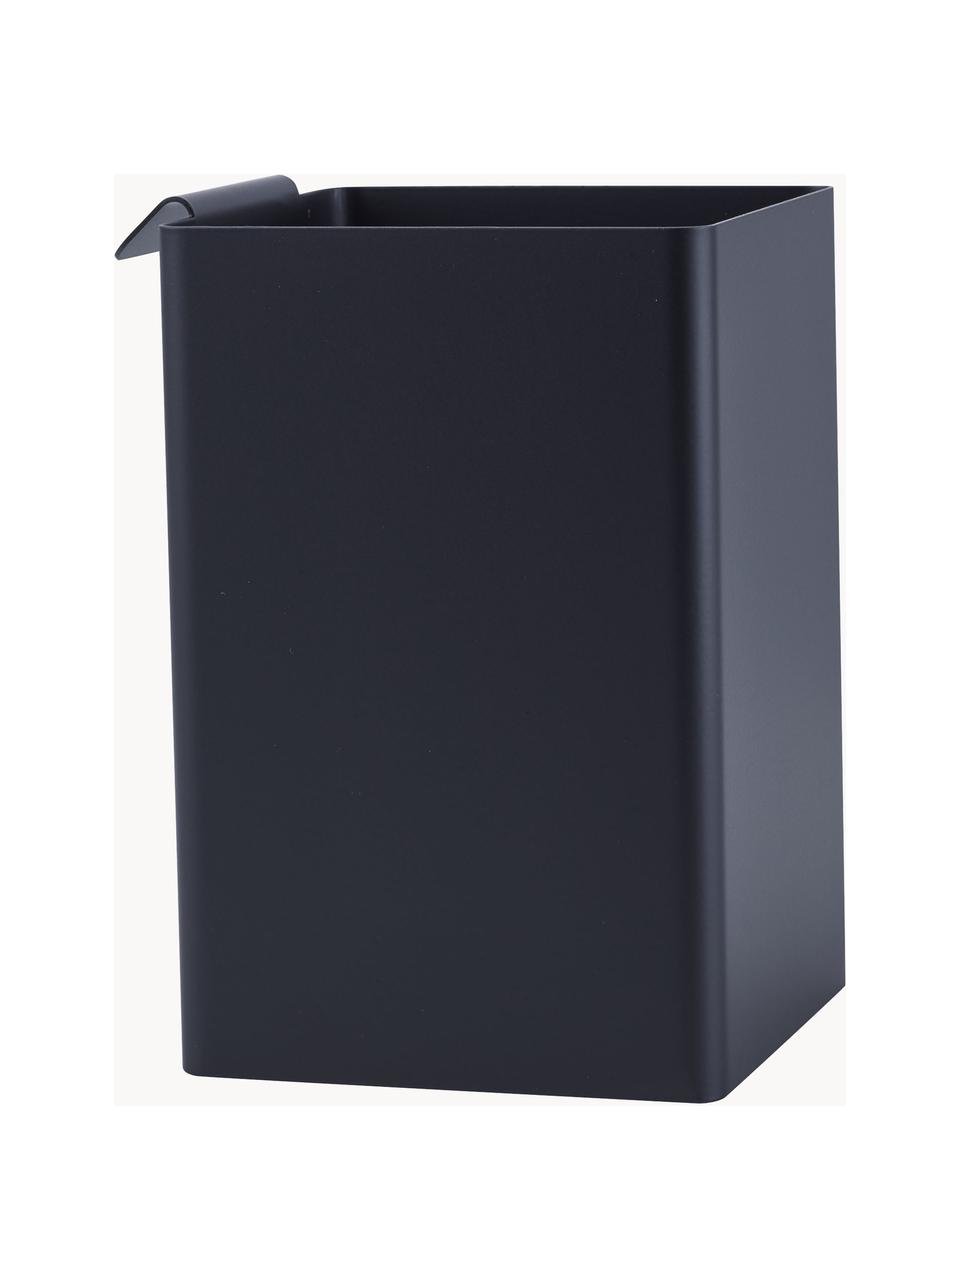 Ocelový kuchyňský úložný box Flex, Potažená ocel, Černá, Š 11 cm, V 16 cm